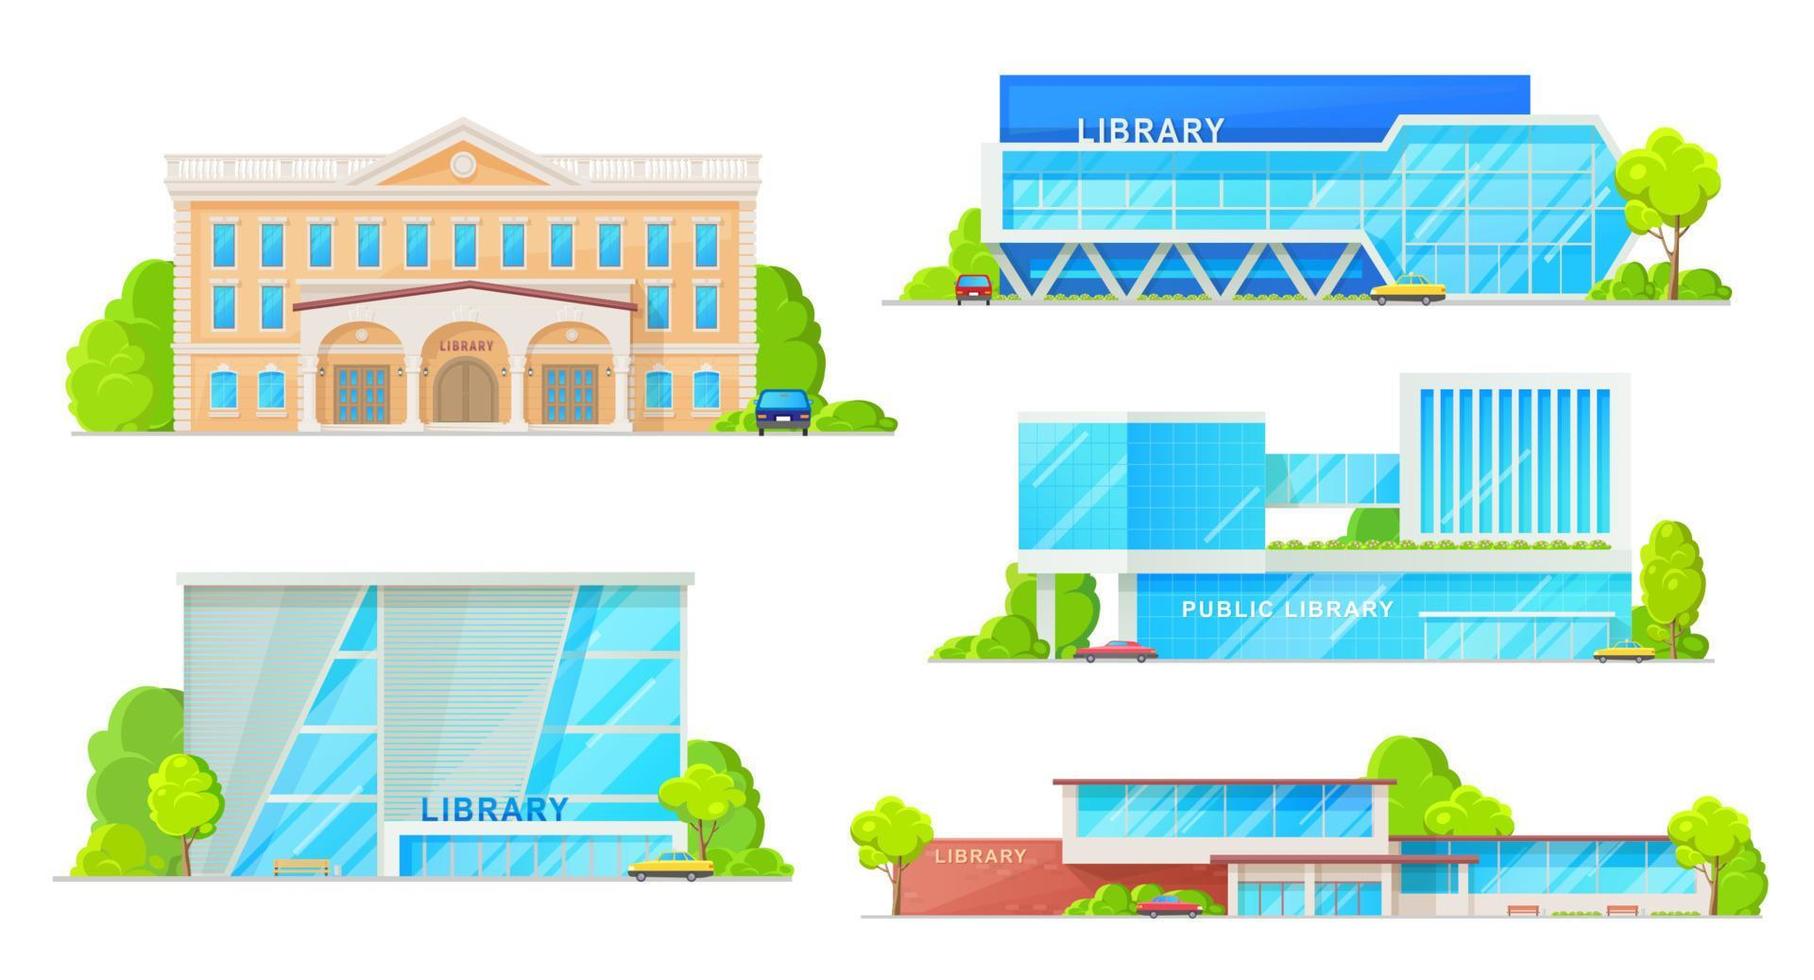 Library modern buildings isolated facade exteriors vector